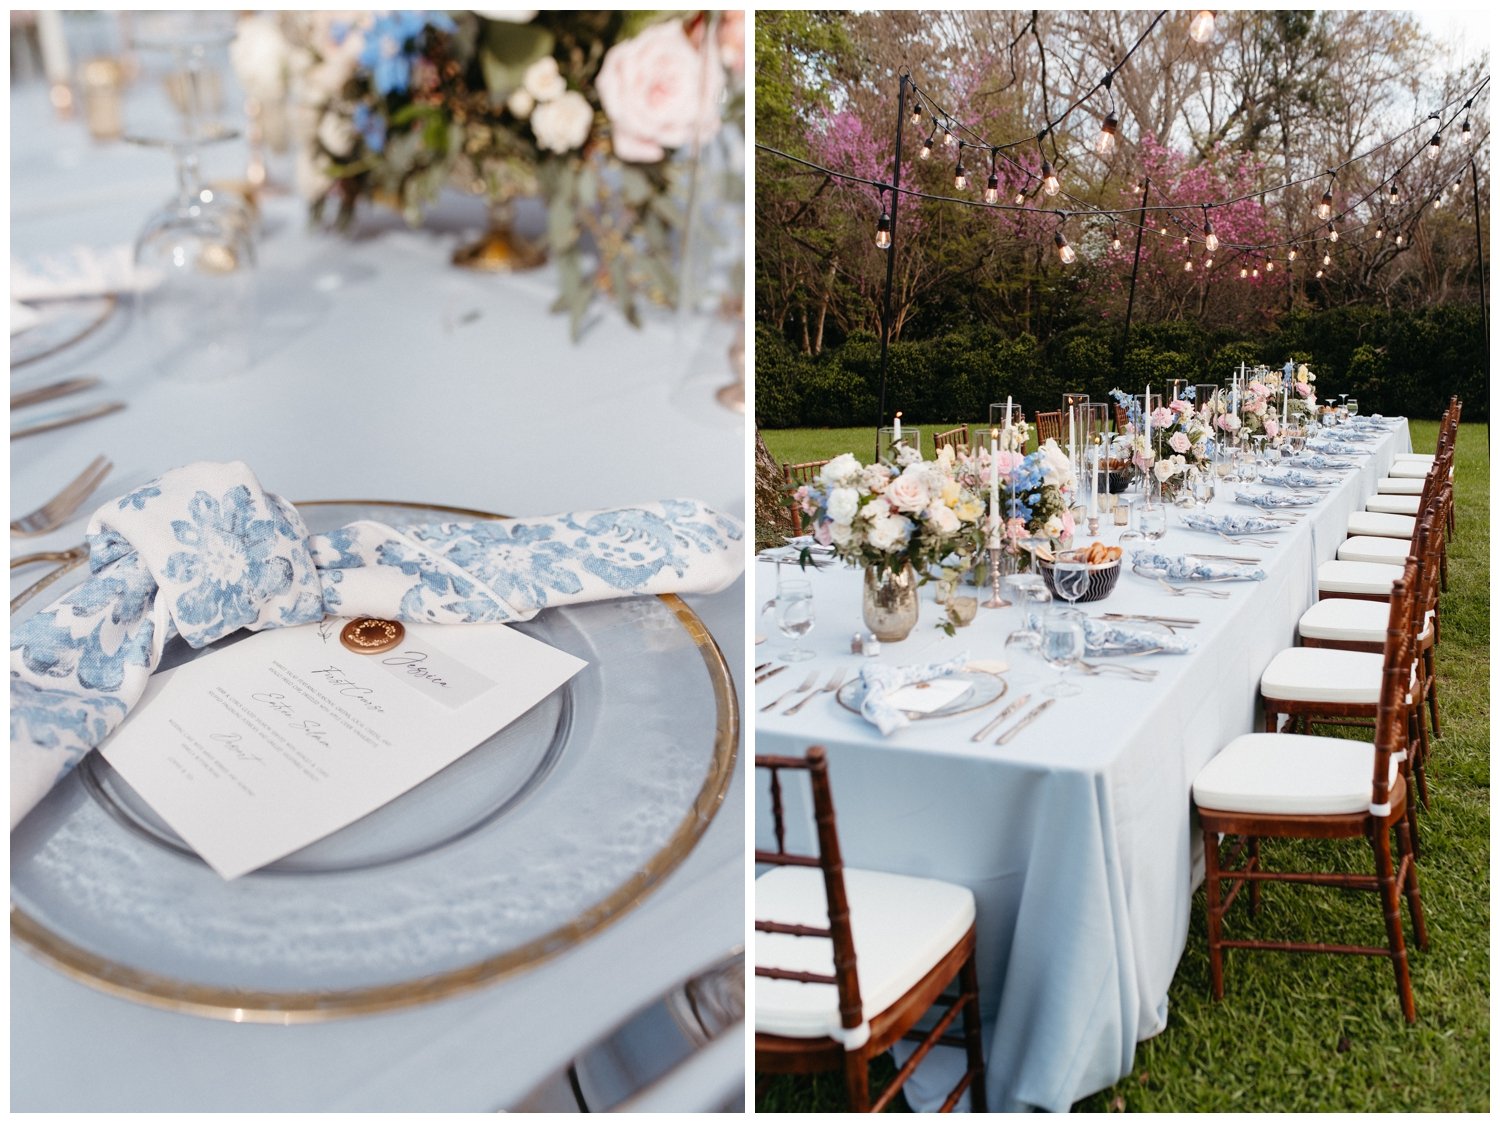 Table set for dinner reception at Atlanta intimate wedding venue